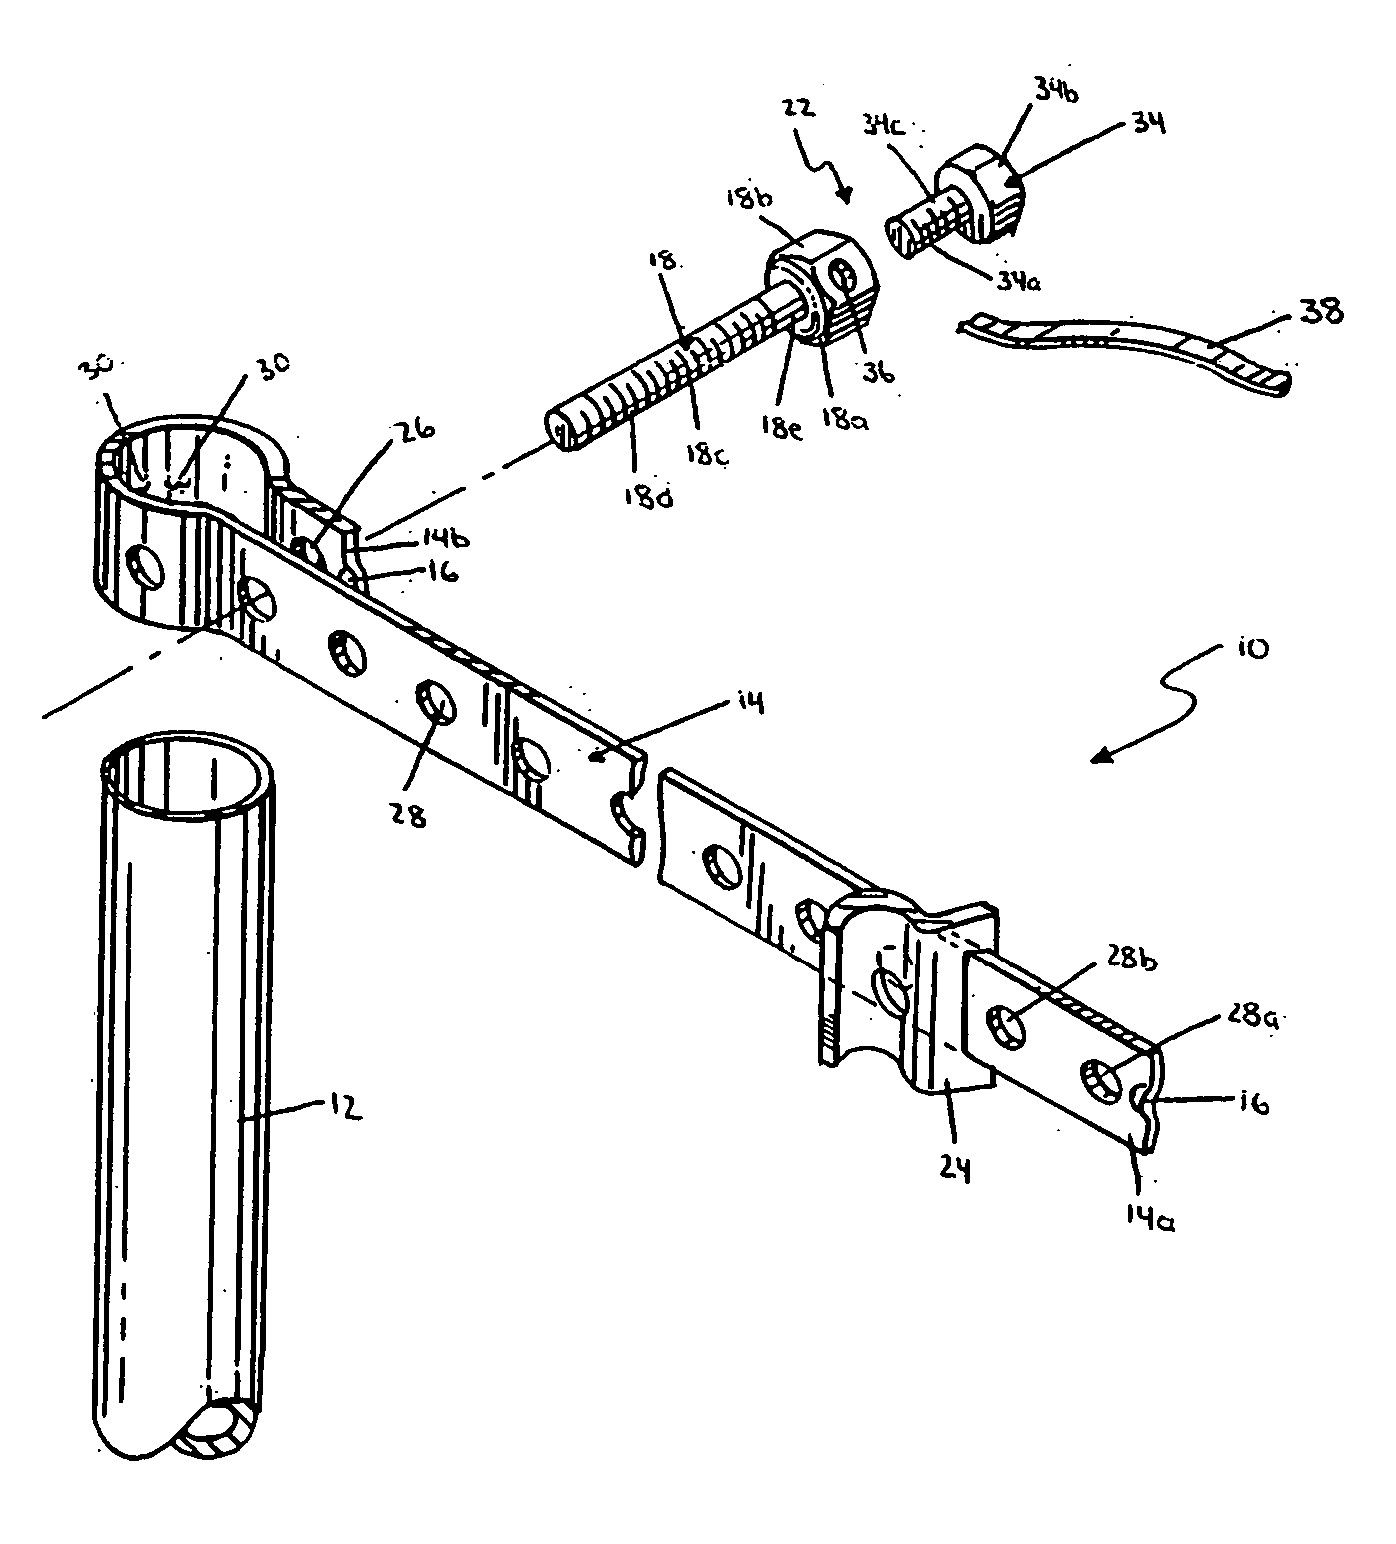 Universal ground strap assembly